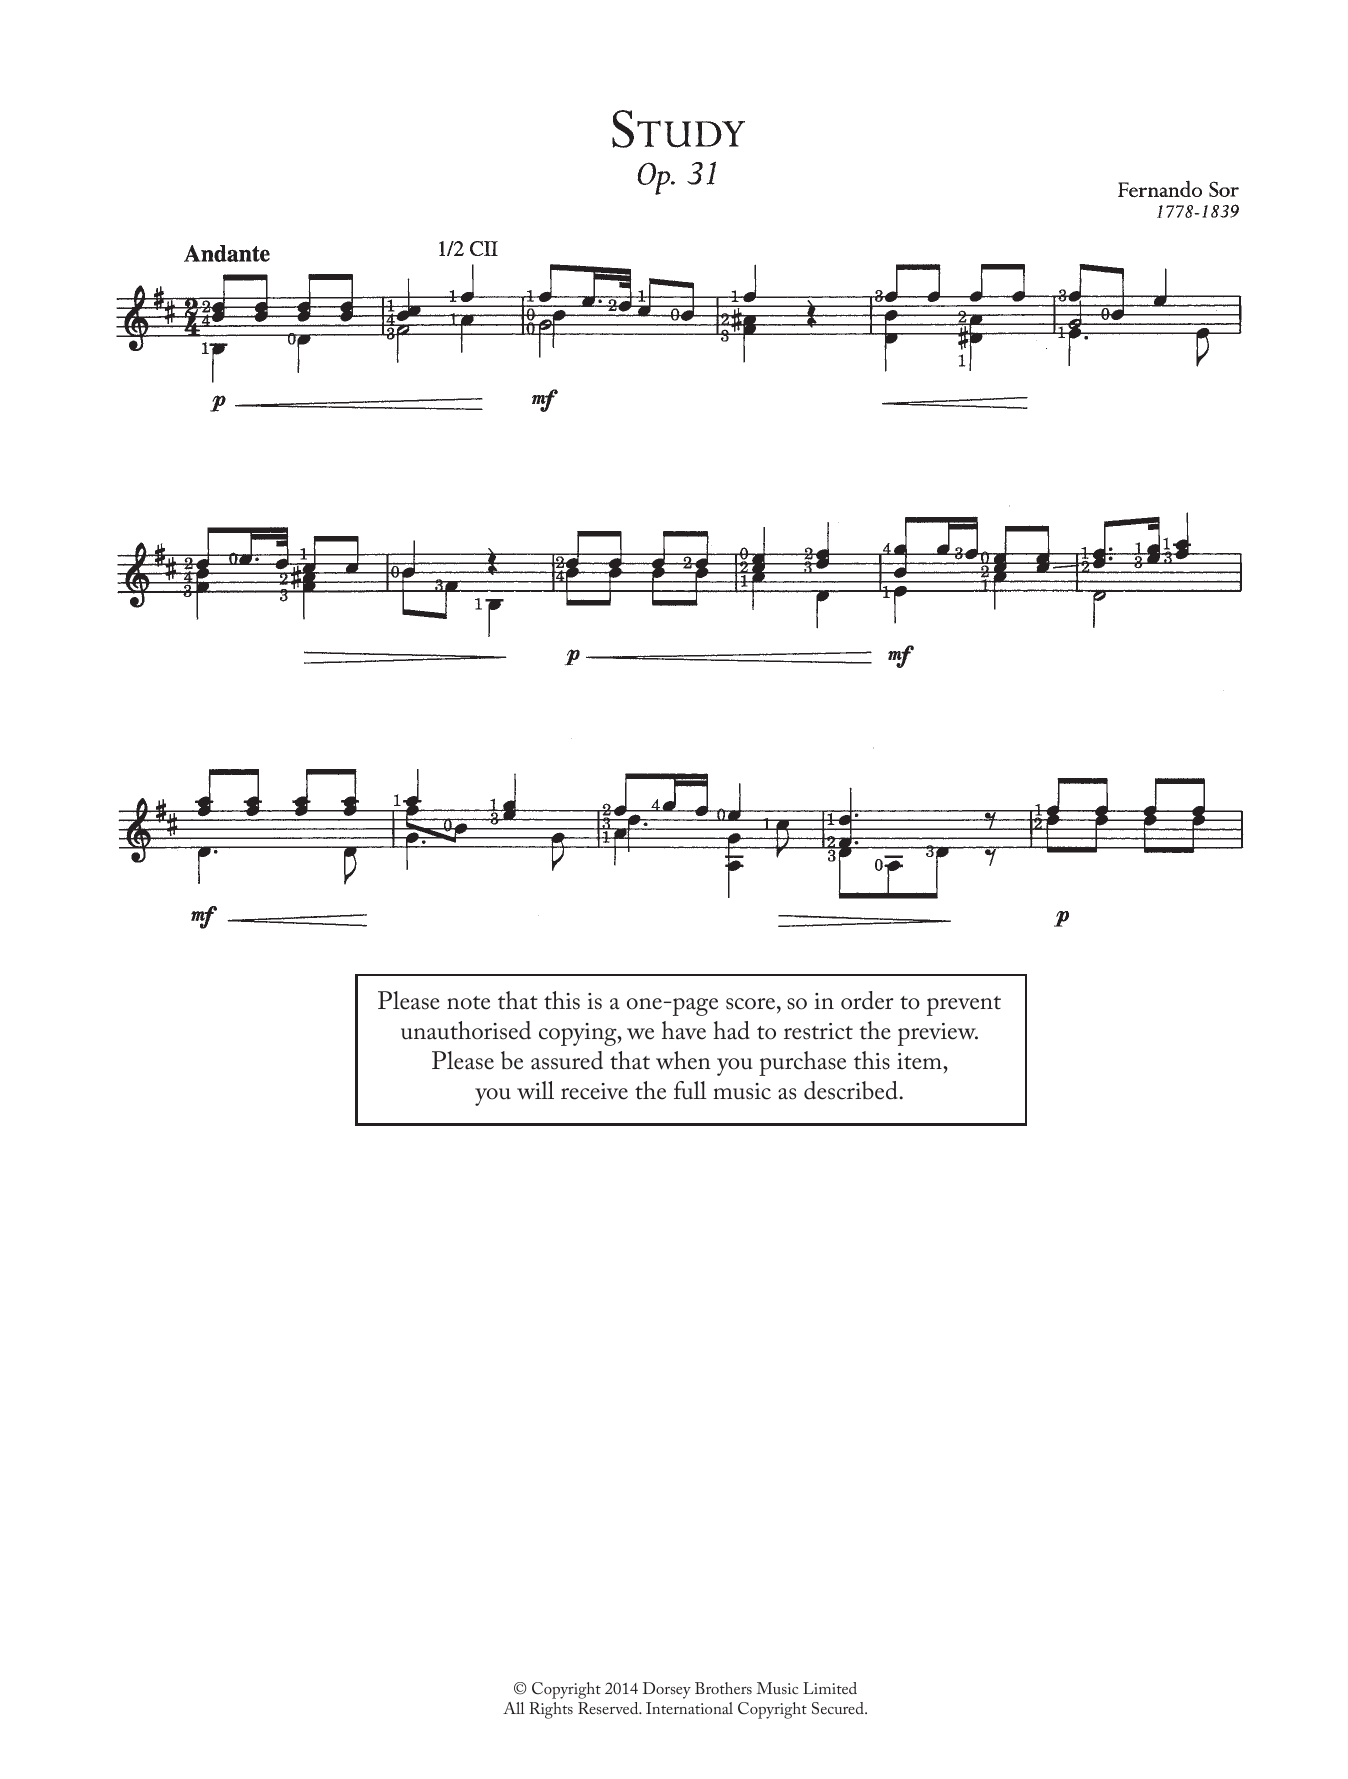 Fernando Sor Study, Op.31 Sheet Music Notes & Chords for Easy Guitar - Download or Print PDF